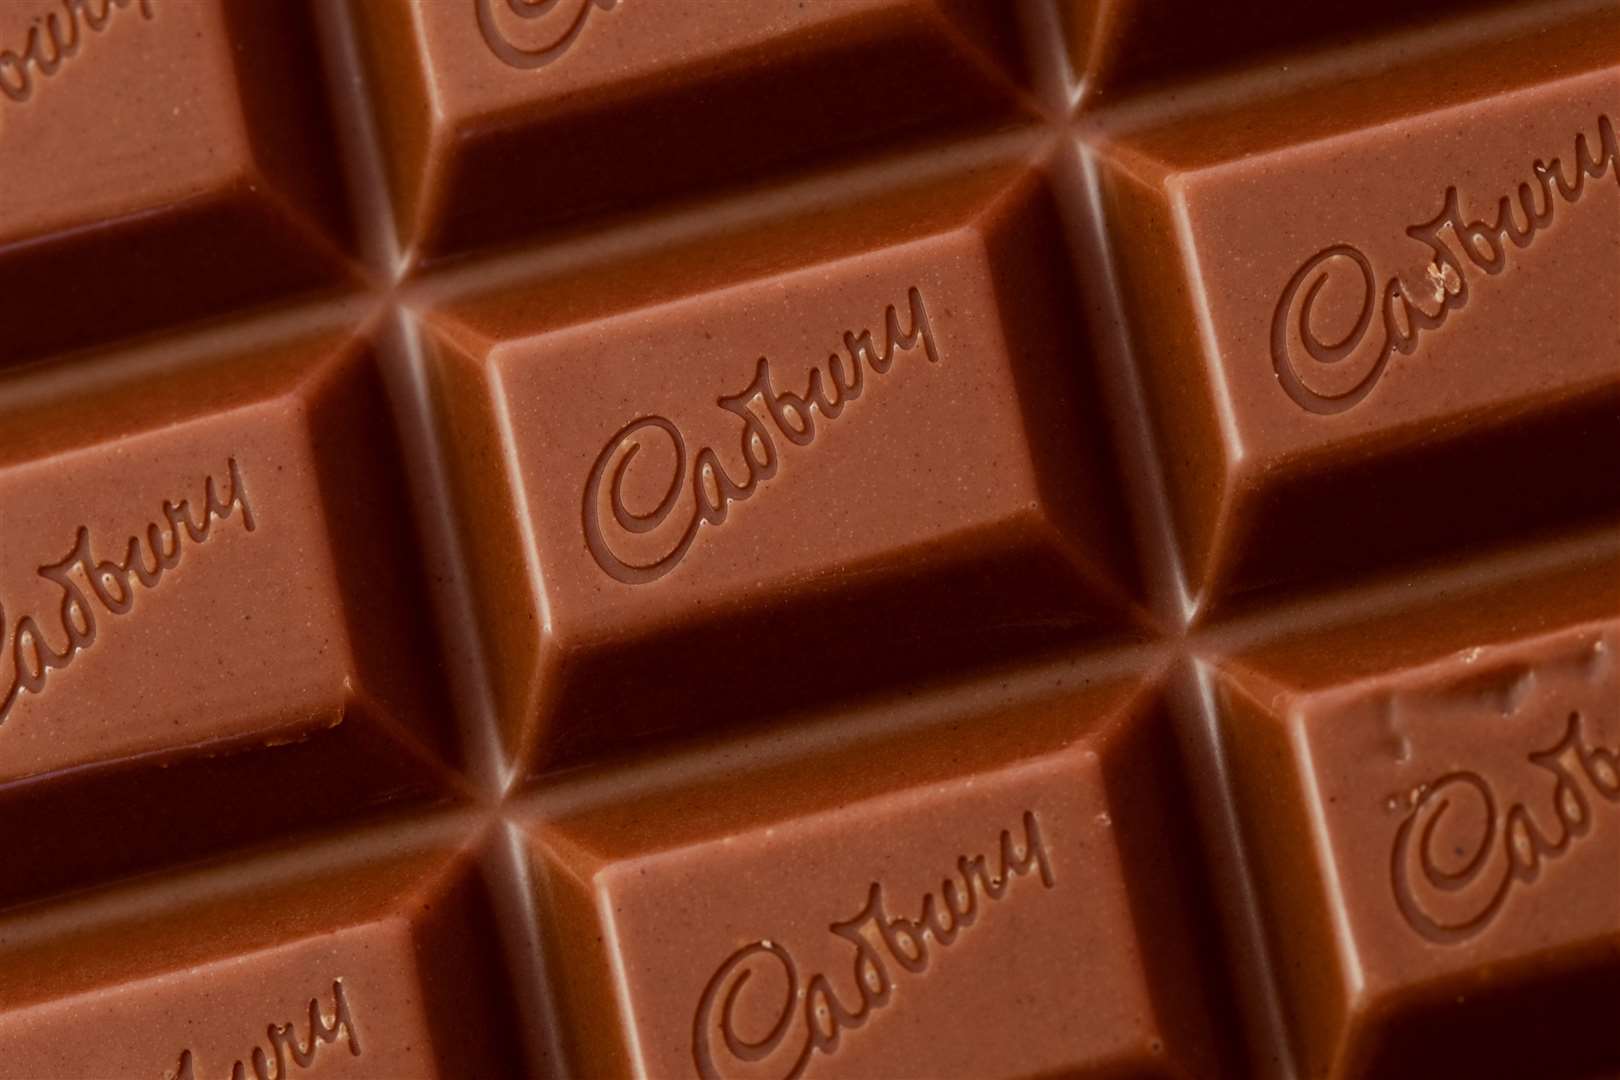 Cadbury is no longer going to make the Orange flavoured Dairy Milk bar. Image: iStock/WILLSIE.